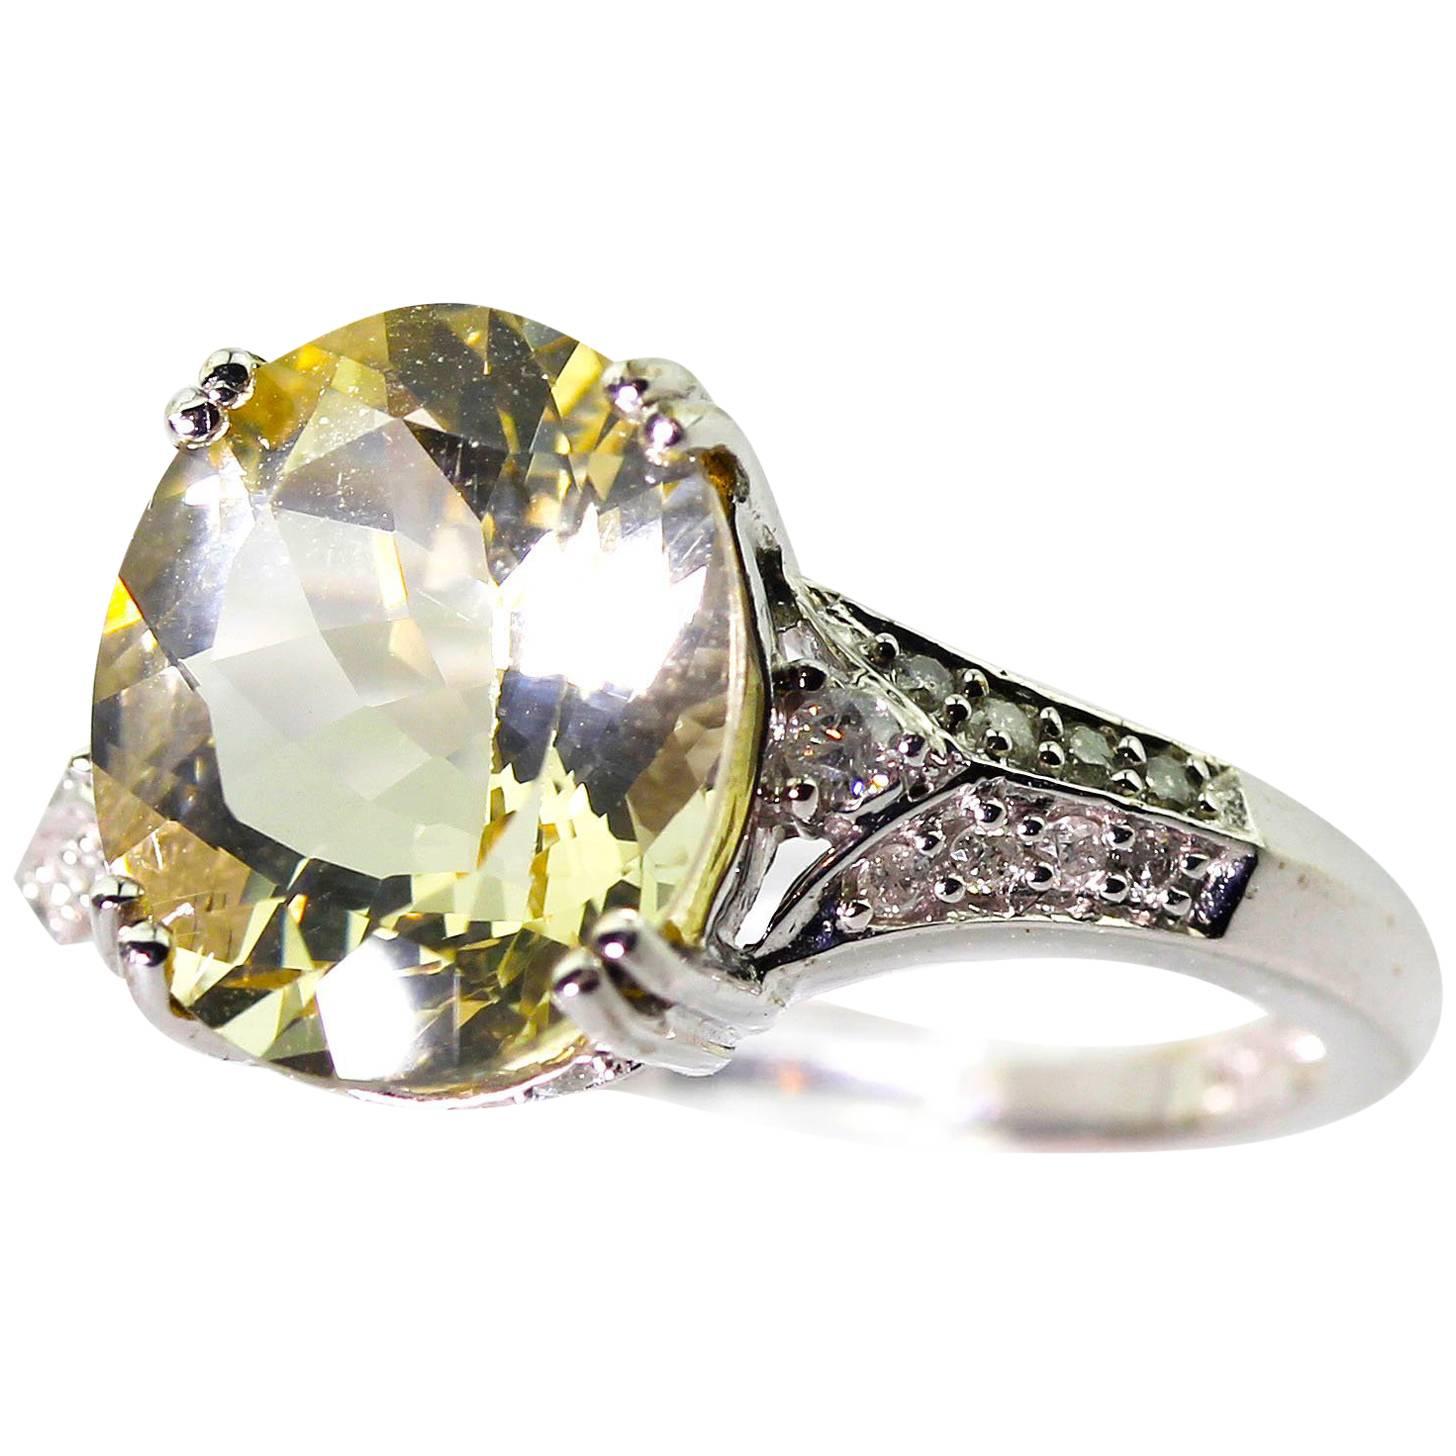 AJD Unique White Diamonds Enhance this 4 Cts Yellow Labradorite Gold Ring